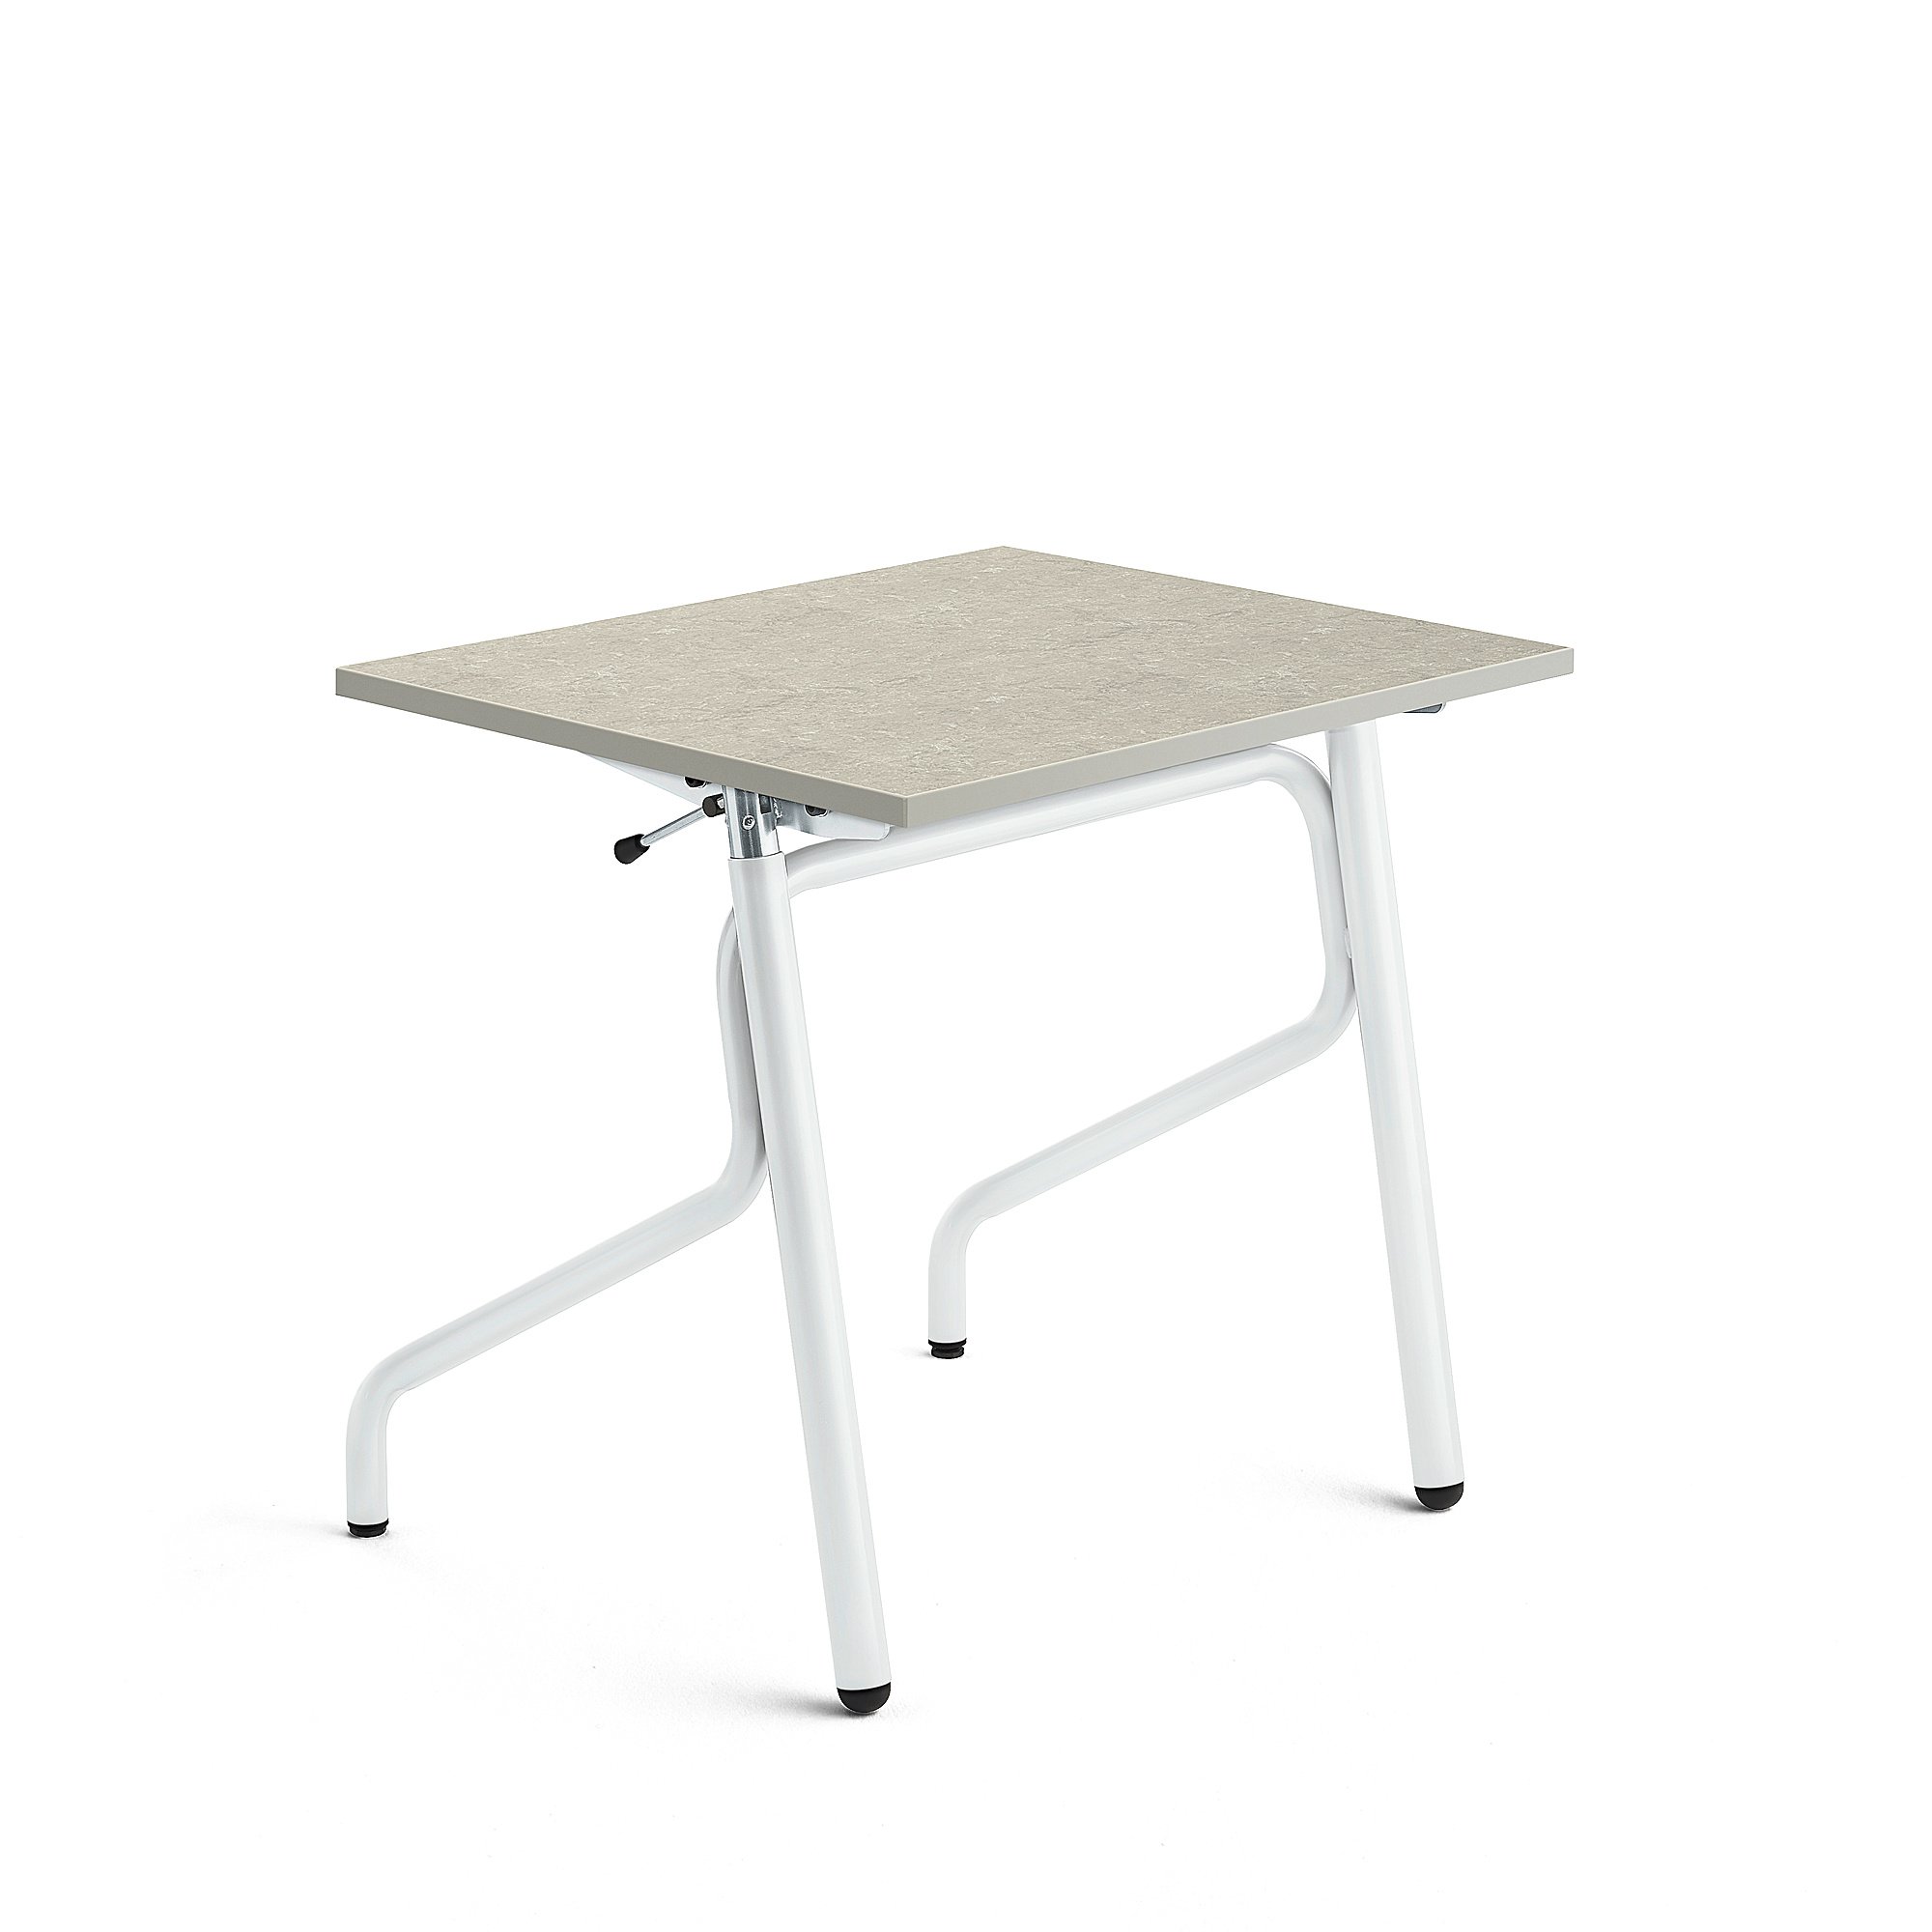 E-shop Nastaviteľná školská lavica ADJUST, 700x600 mm, linoleum - šedá, biela